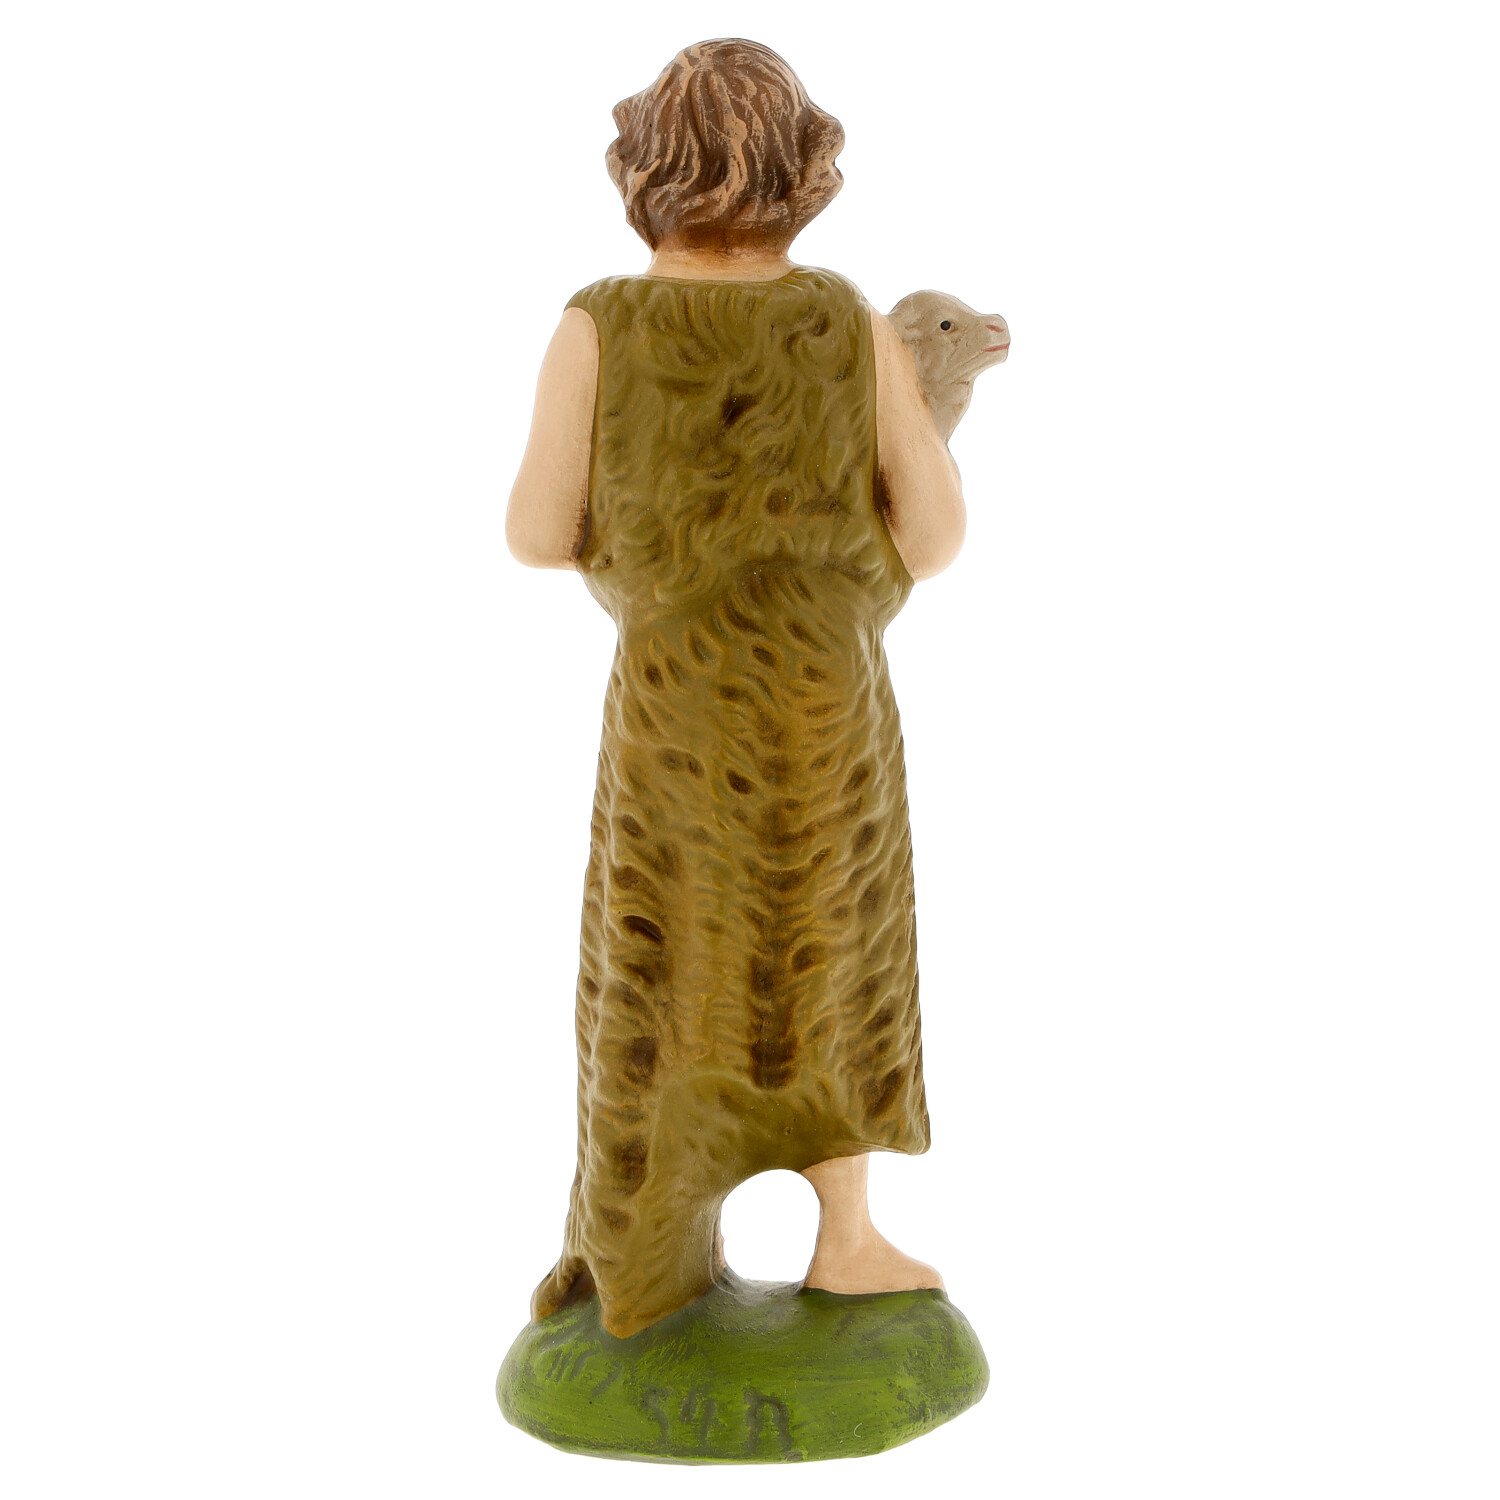 Shepherd in fur dress with sheep - Marolin Nativity figure - made in Germany